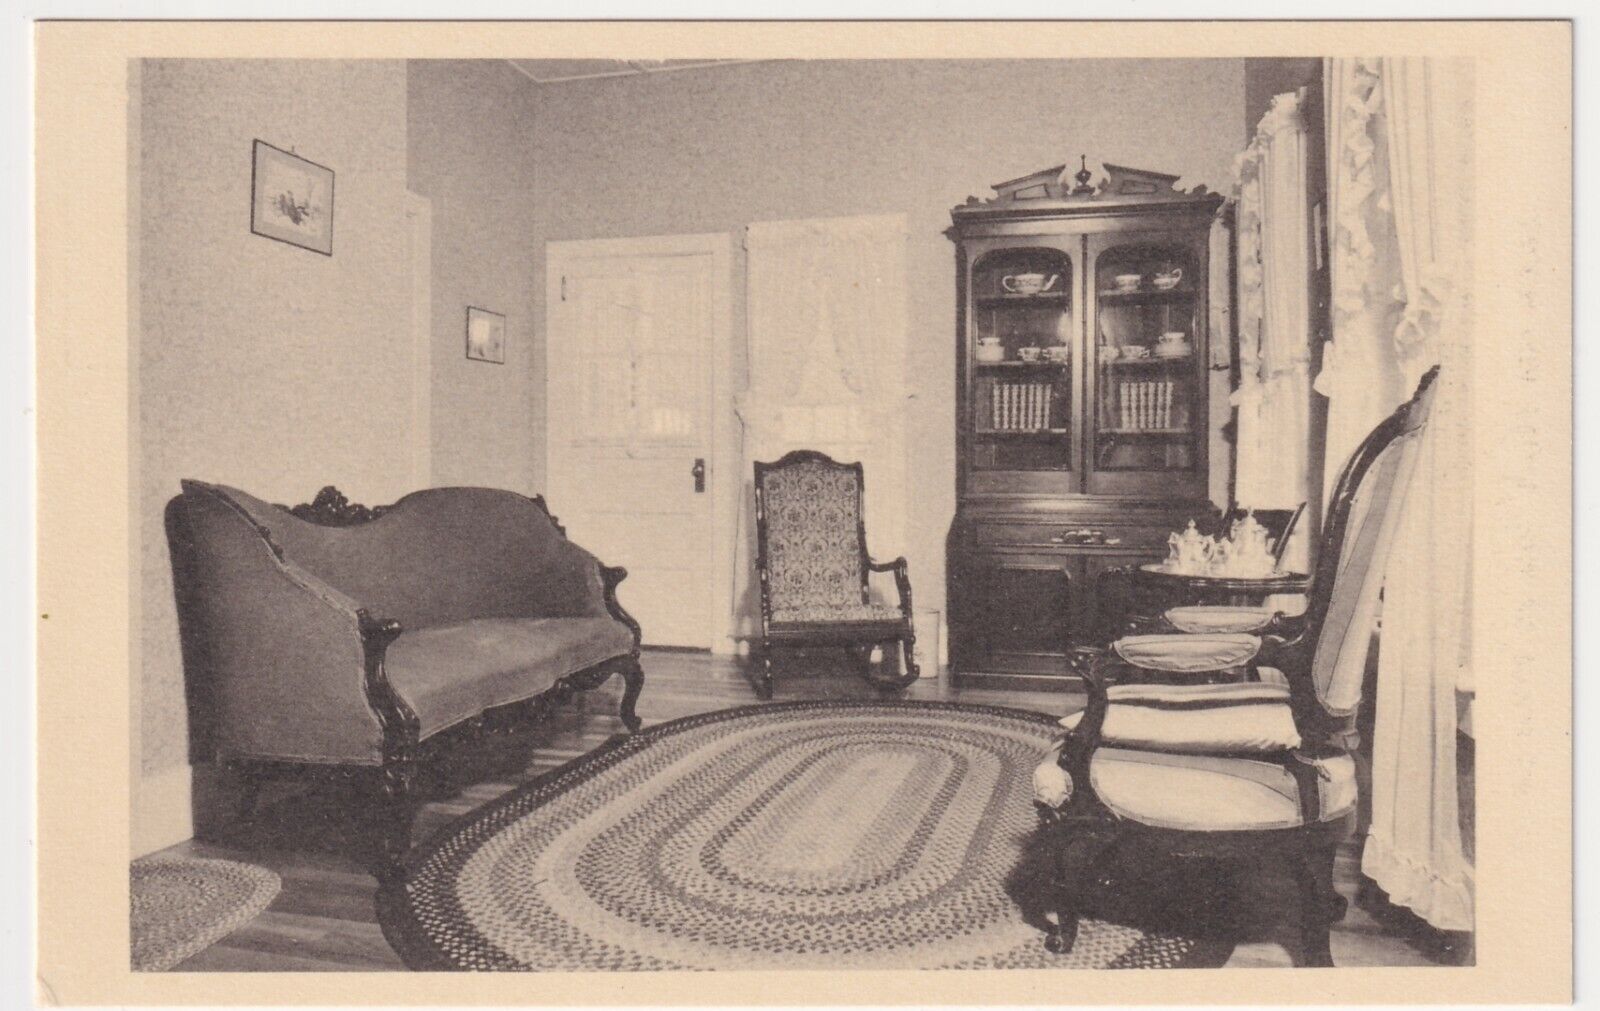 TANGLEWOOD SERGE KOUSSEVITZKY ROOM IN NATHANIEL HAWTHORNE COTTAGE CIRCA 1940.